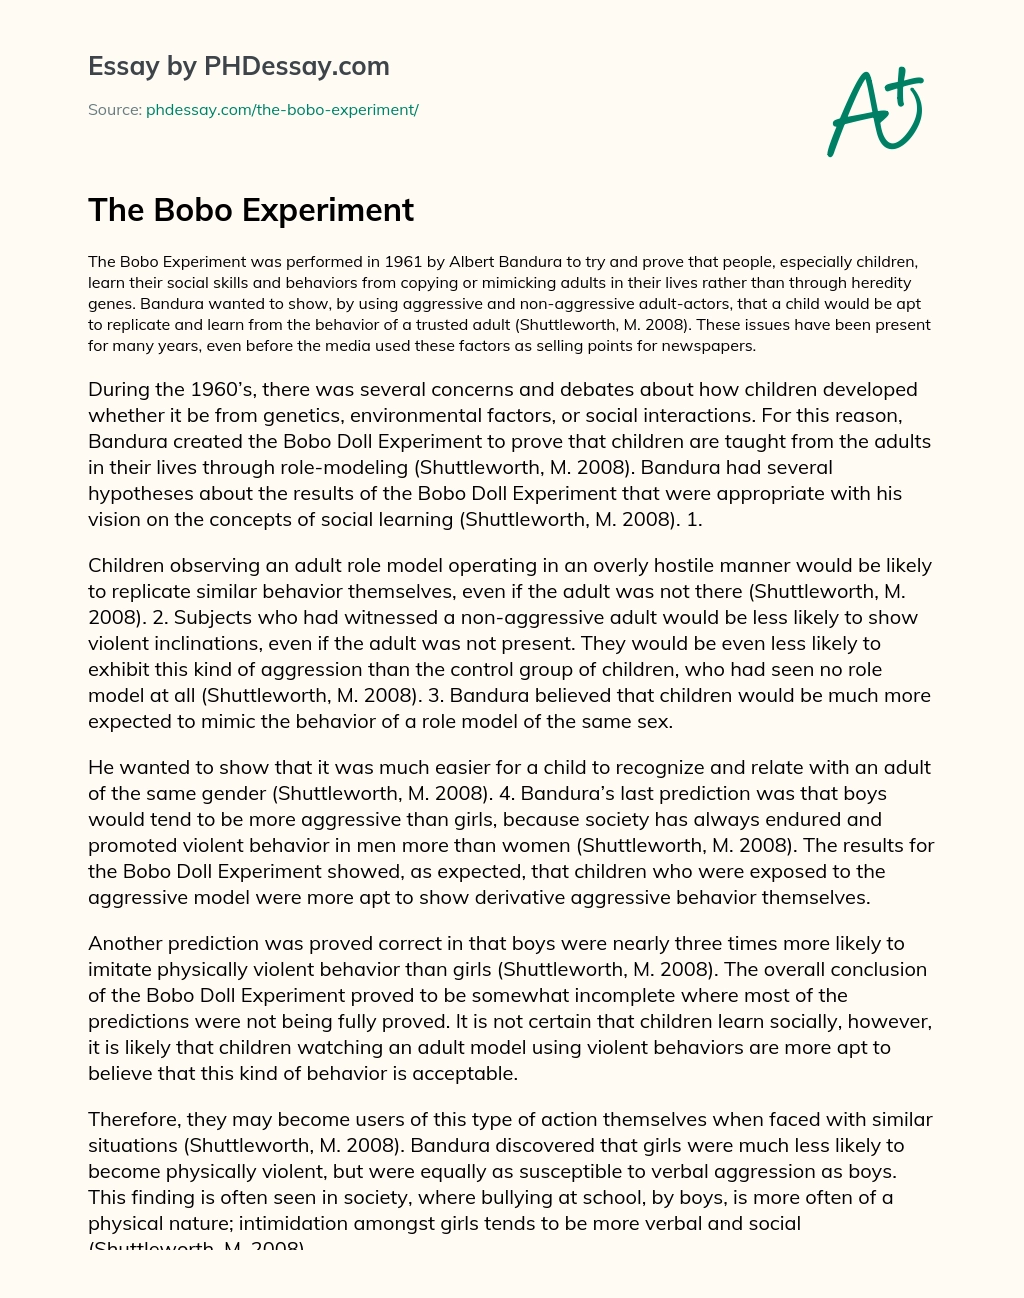 The Bobo Experiment essay